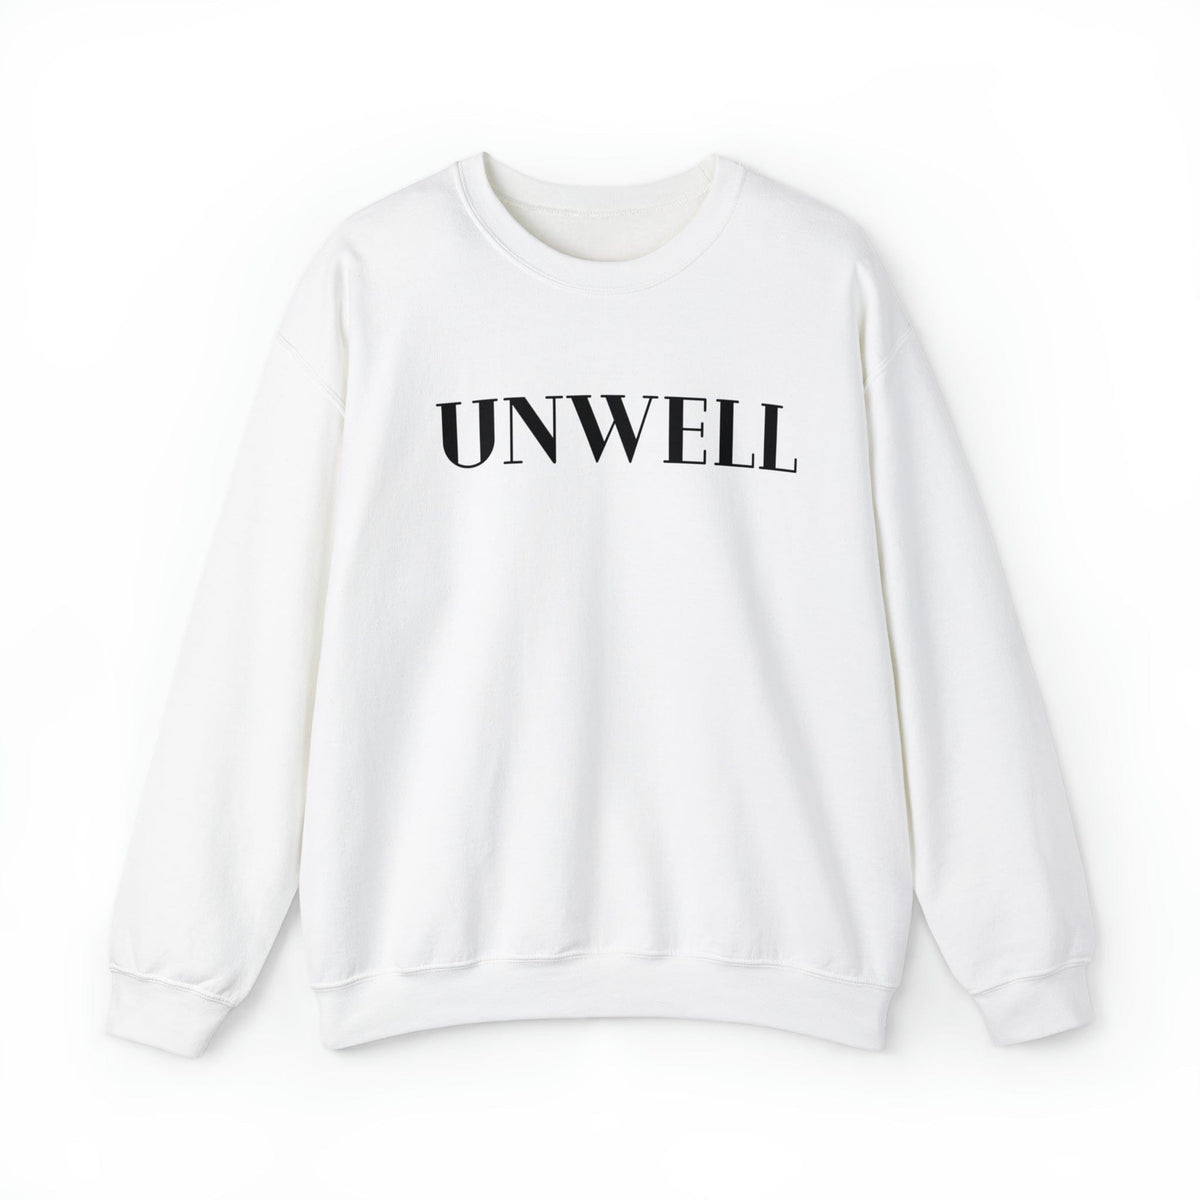 I am Unwell Sweatshirt Funny Crewneck Sweater Sweatshirt TheFringeCultureCollective